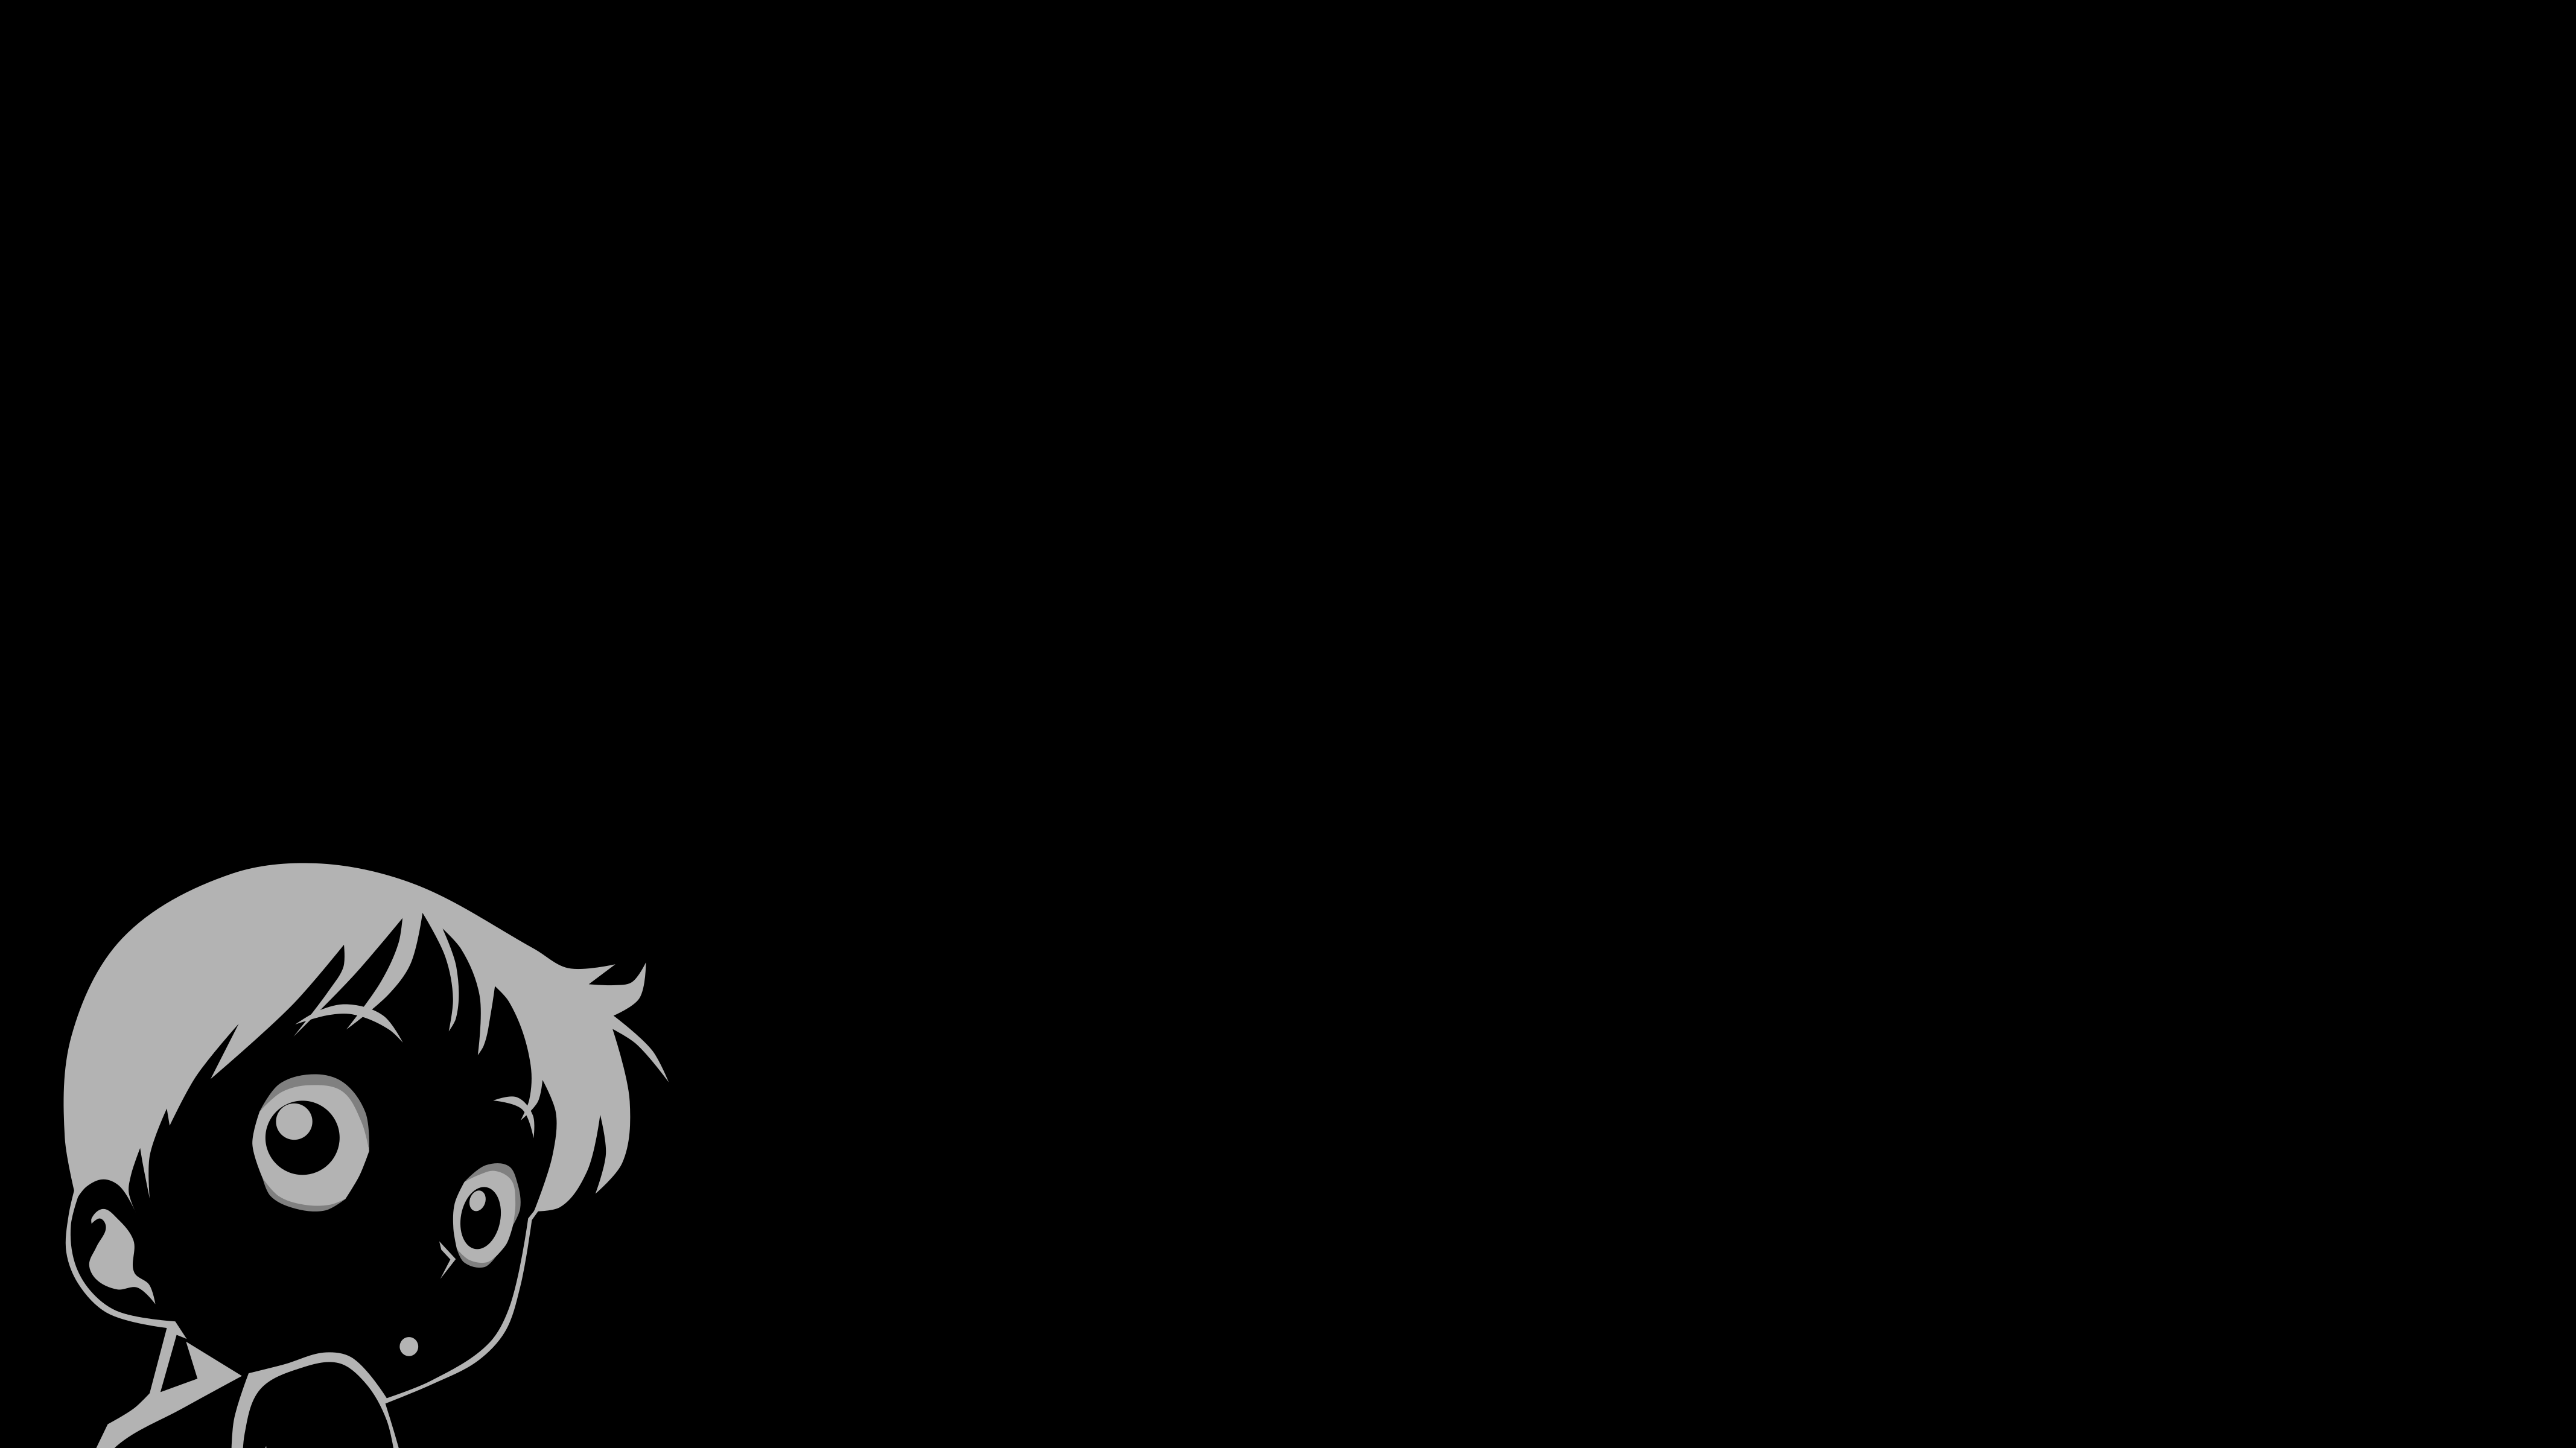 Anime 4269x2400 simple background black background anime minimalism anime boys